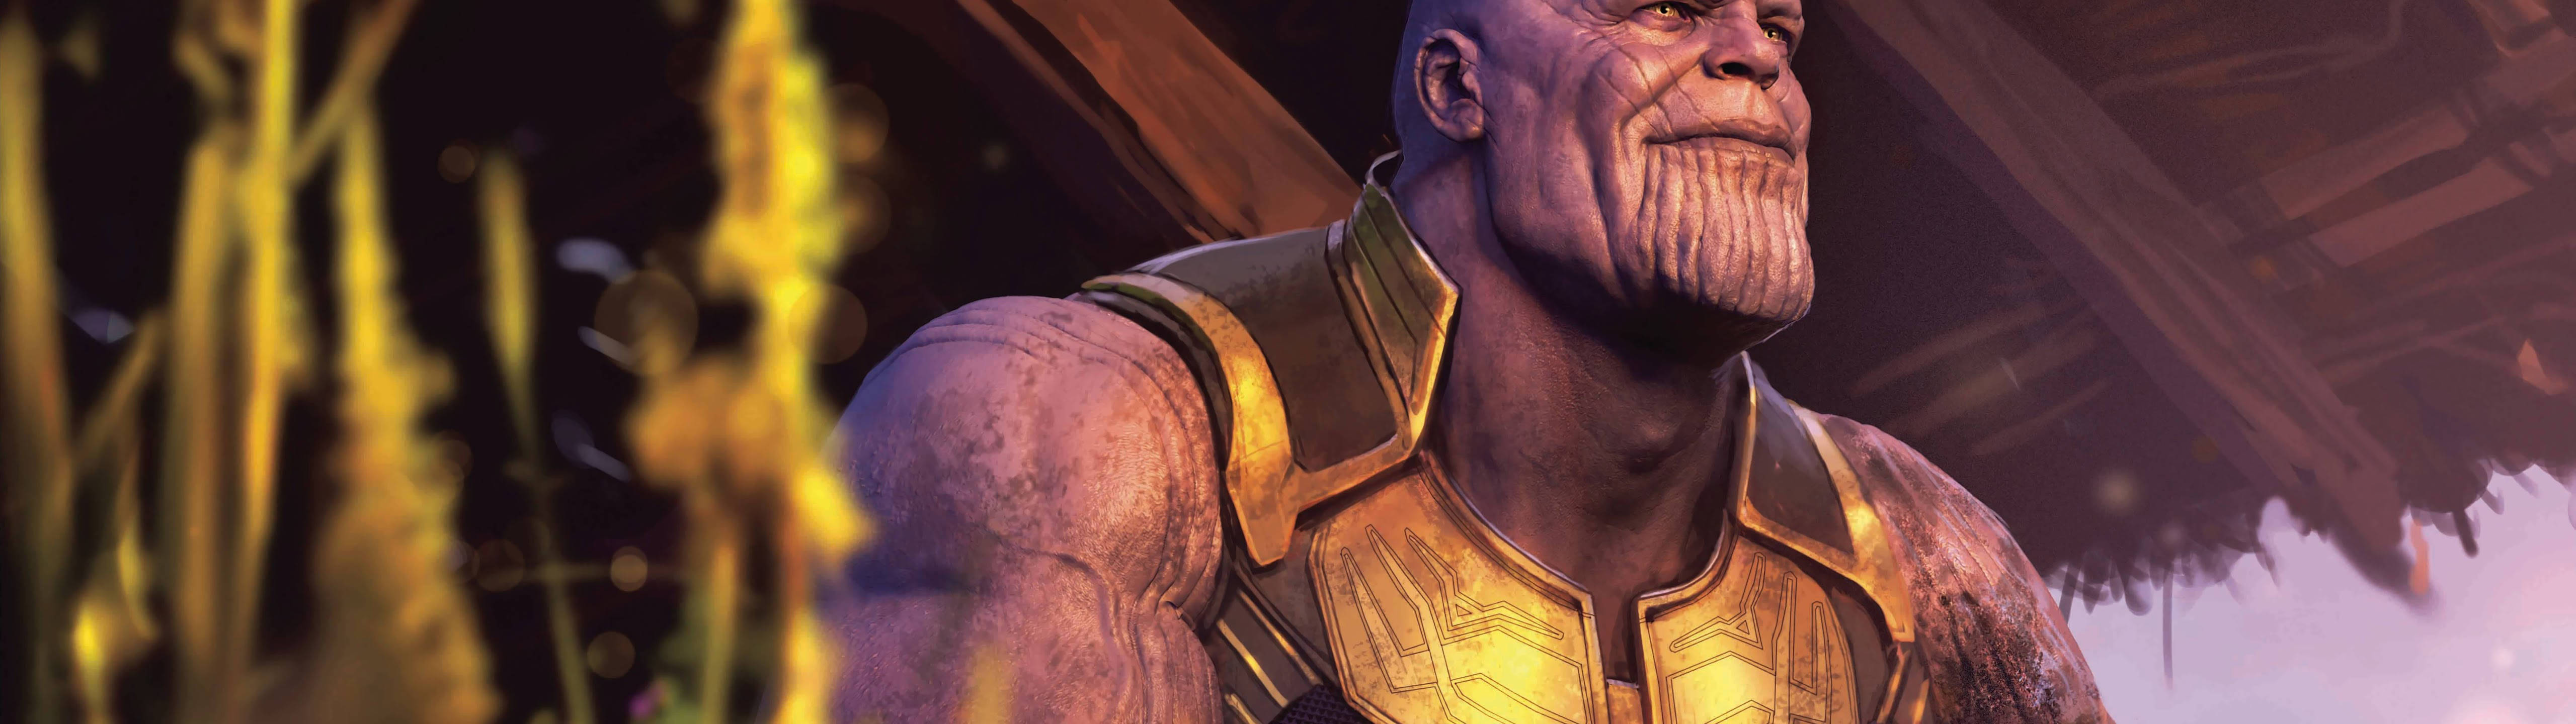 Marvel's Supervillain Thanos 5120 X 1440